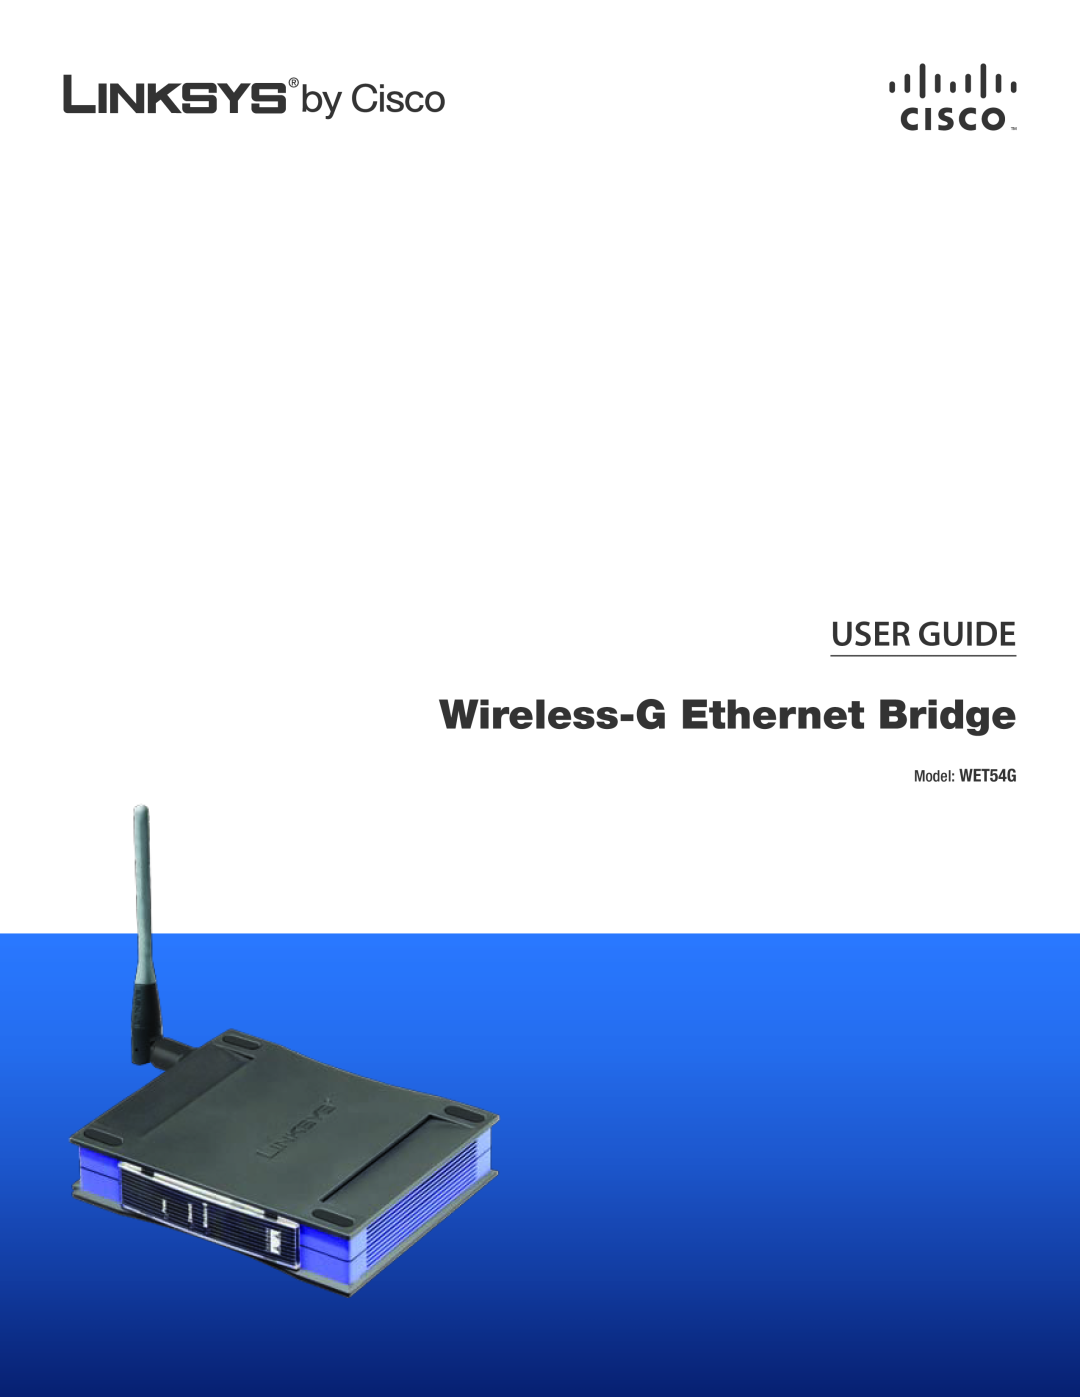 Cisco Systems manual Wireless-G Ethernet Bridge, User Guide, Model WET54G 